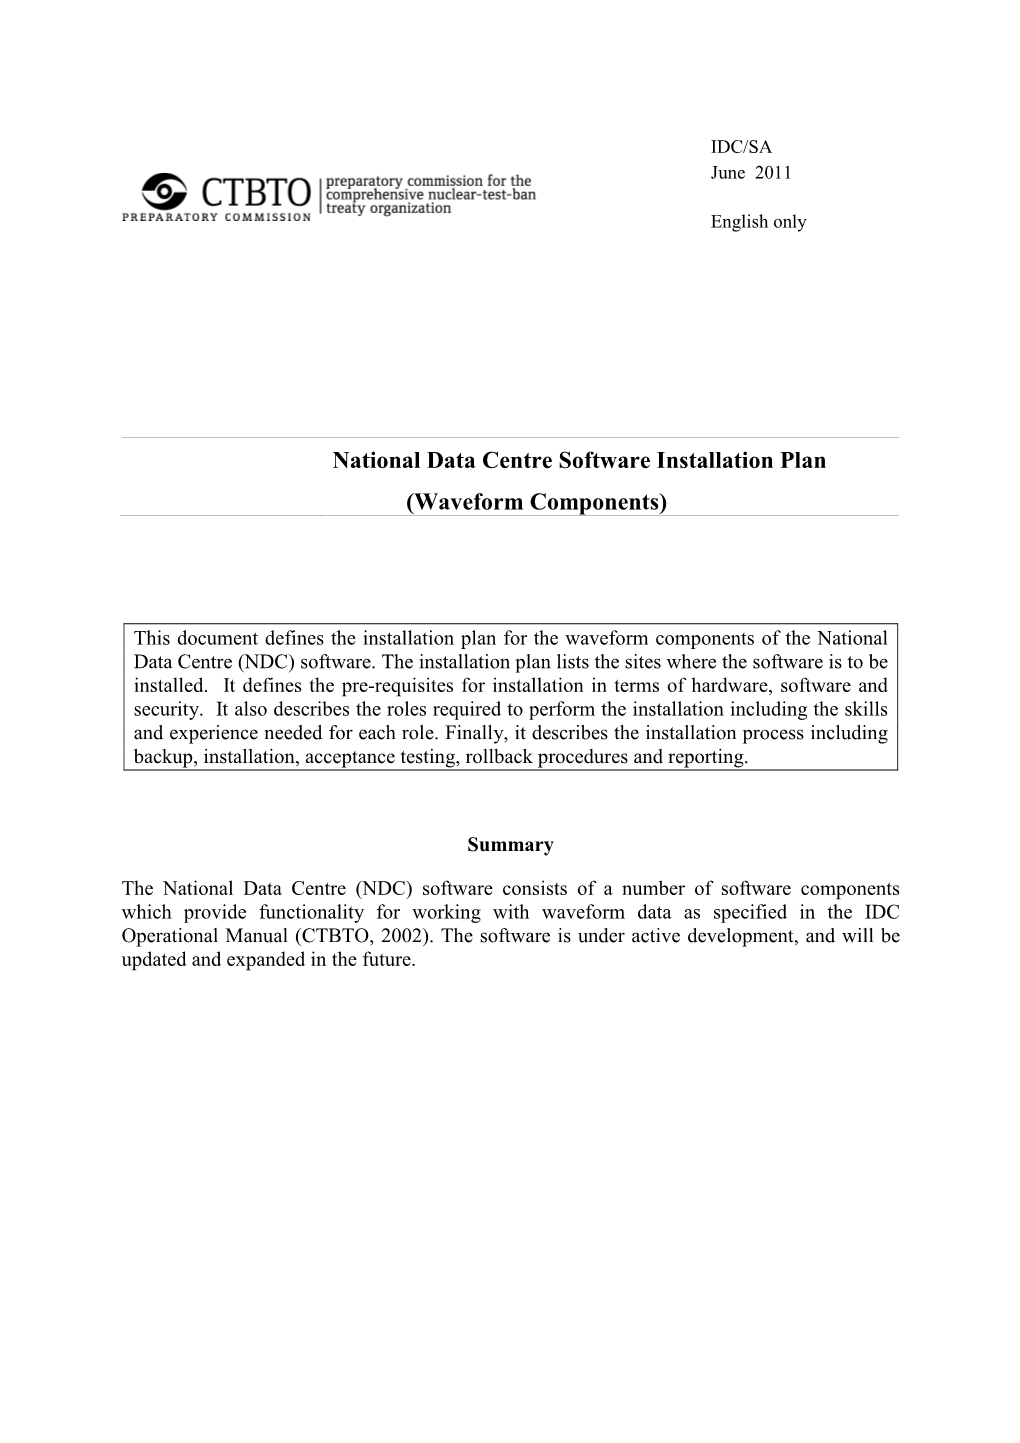 National Data Centre Software Installation Plan